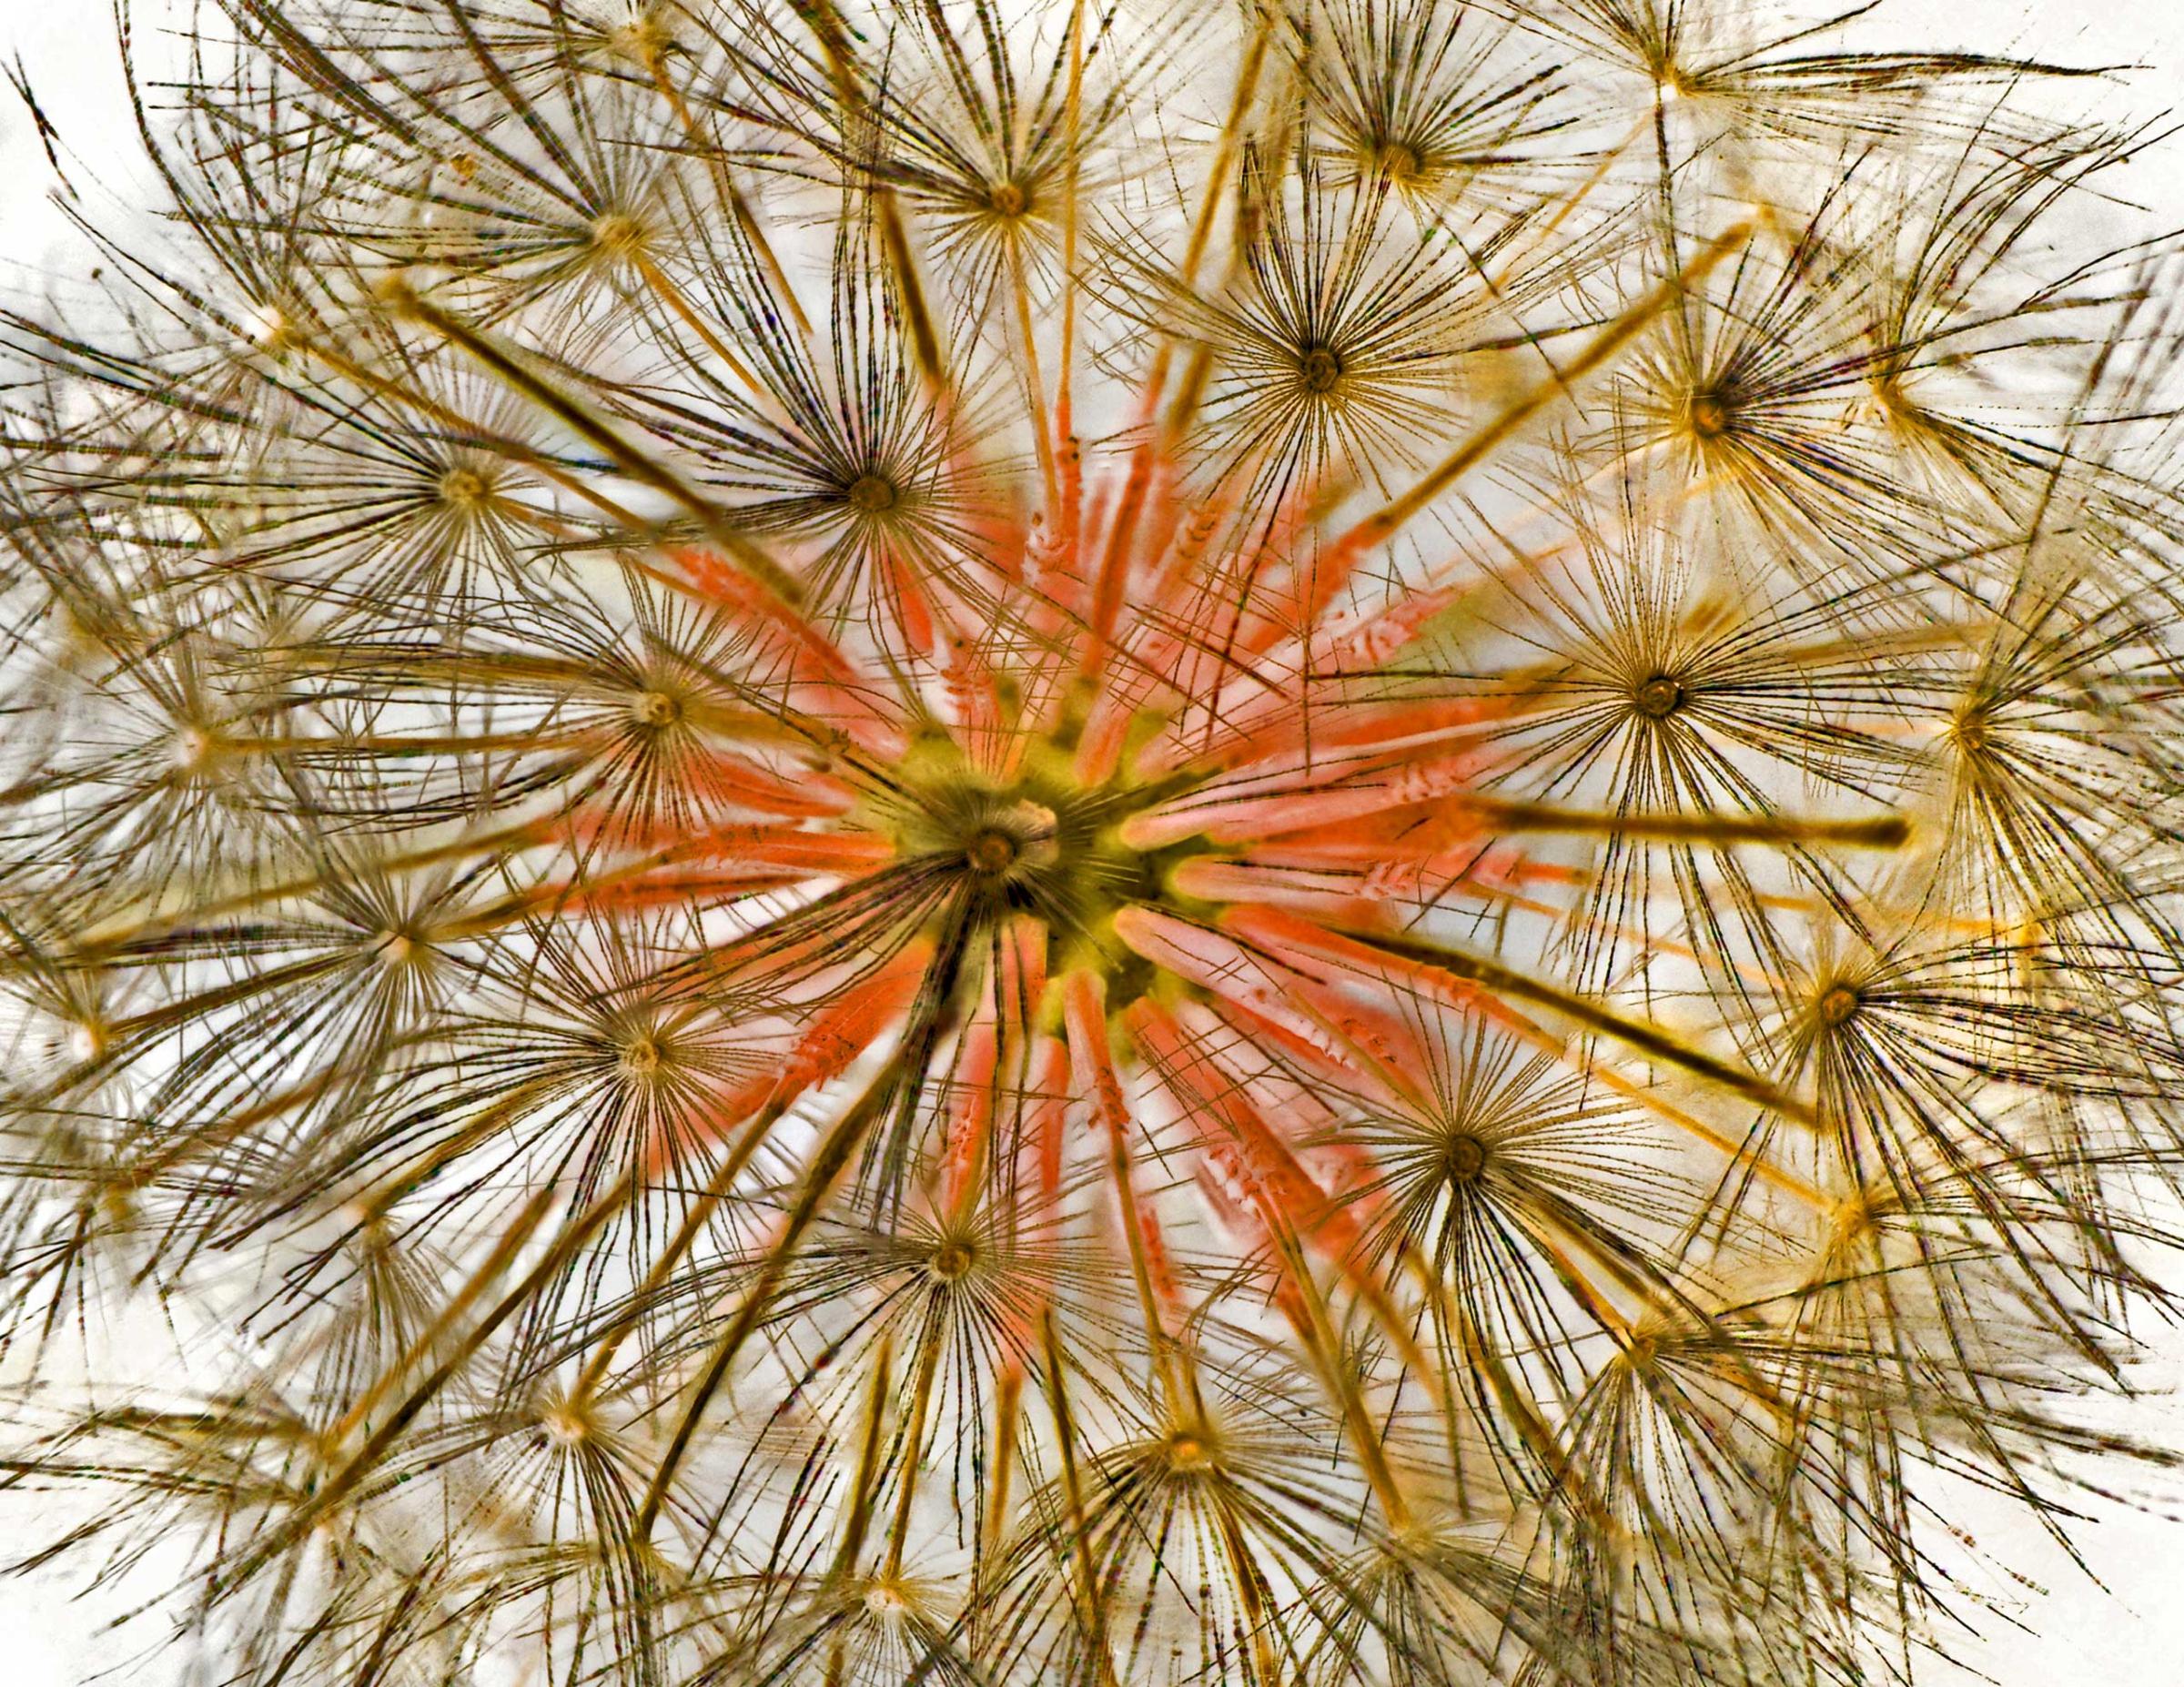 A dandelion at 10x magnification.